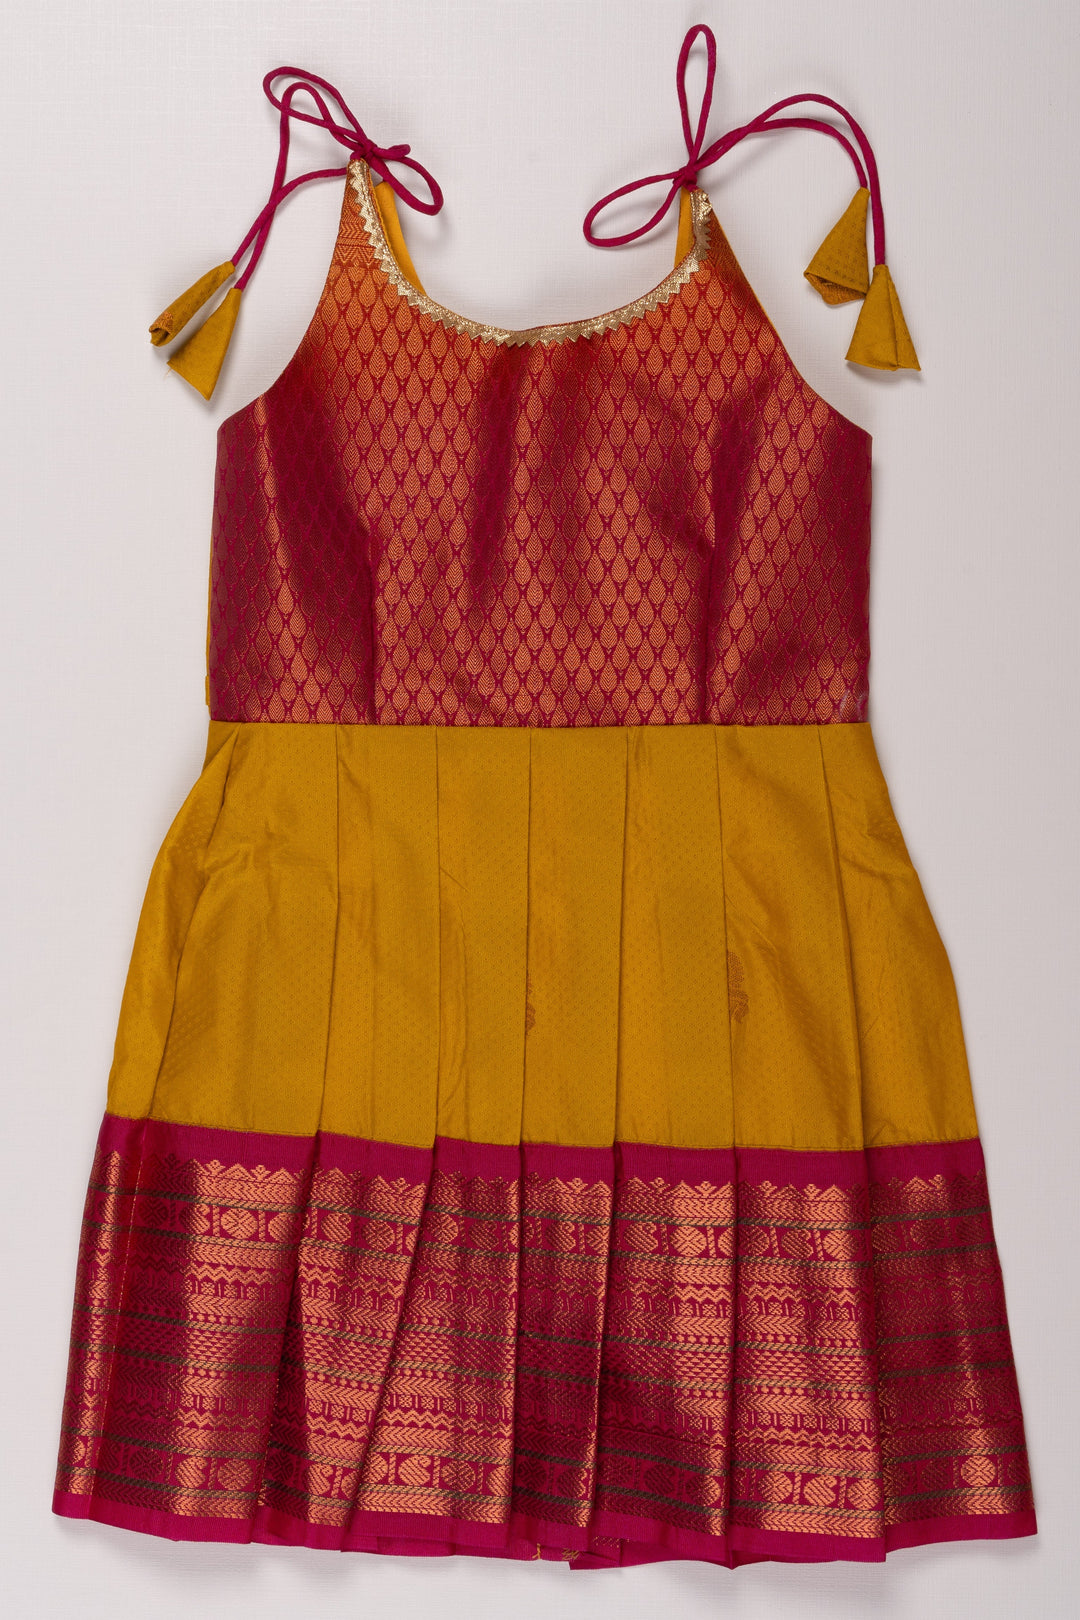 The Nesavu Tie Up Frock Vibrant Pink & Yellow Silk Tie-Up Dress - Festive Chic Nesavu 14 (6M) / Yellow / Style 1 T332A-14 Pink Silk Dress | Yellow Pleated Skirt | Traditional Elegance